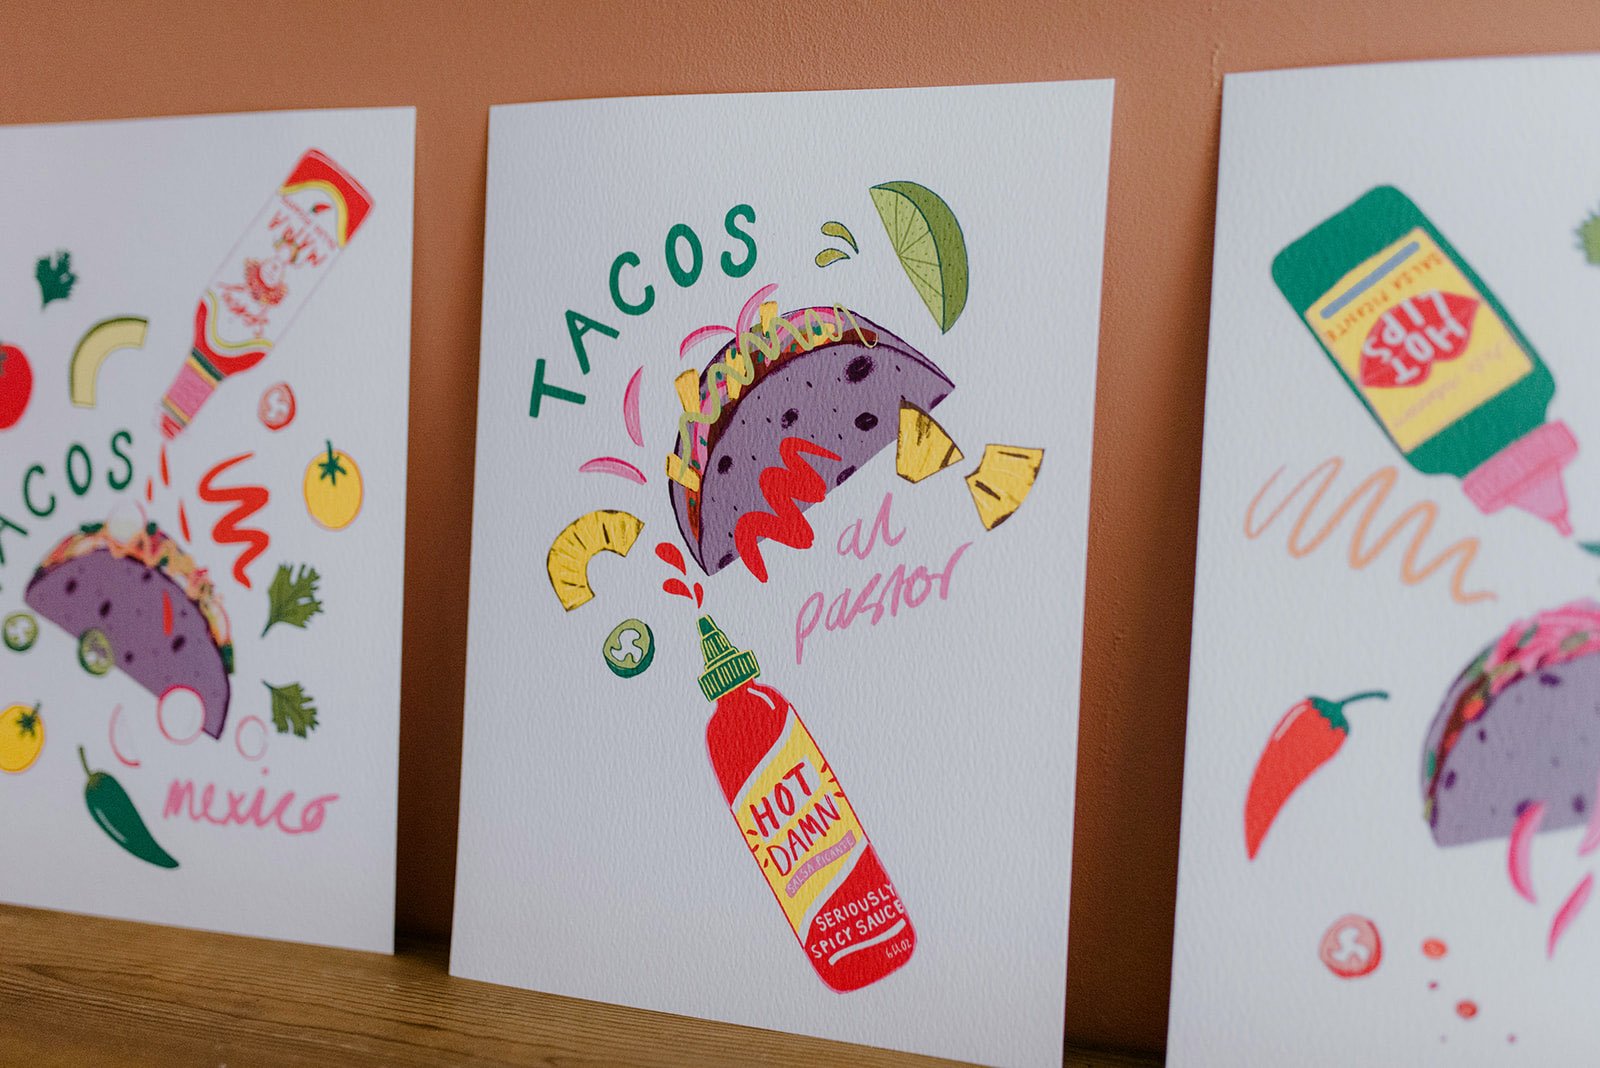 Tacos Print Series